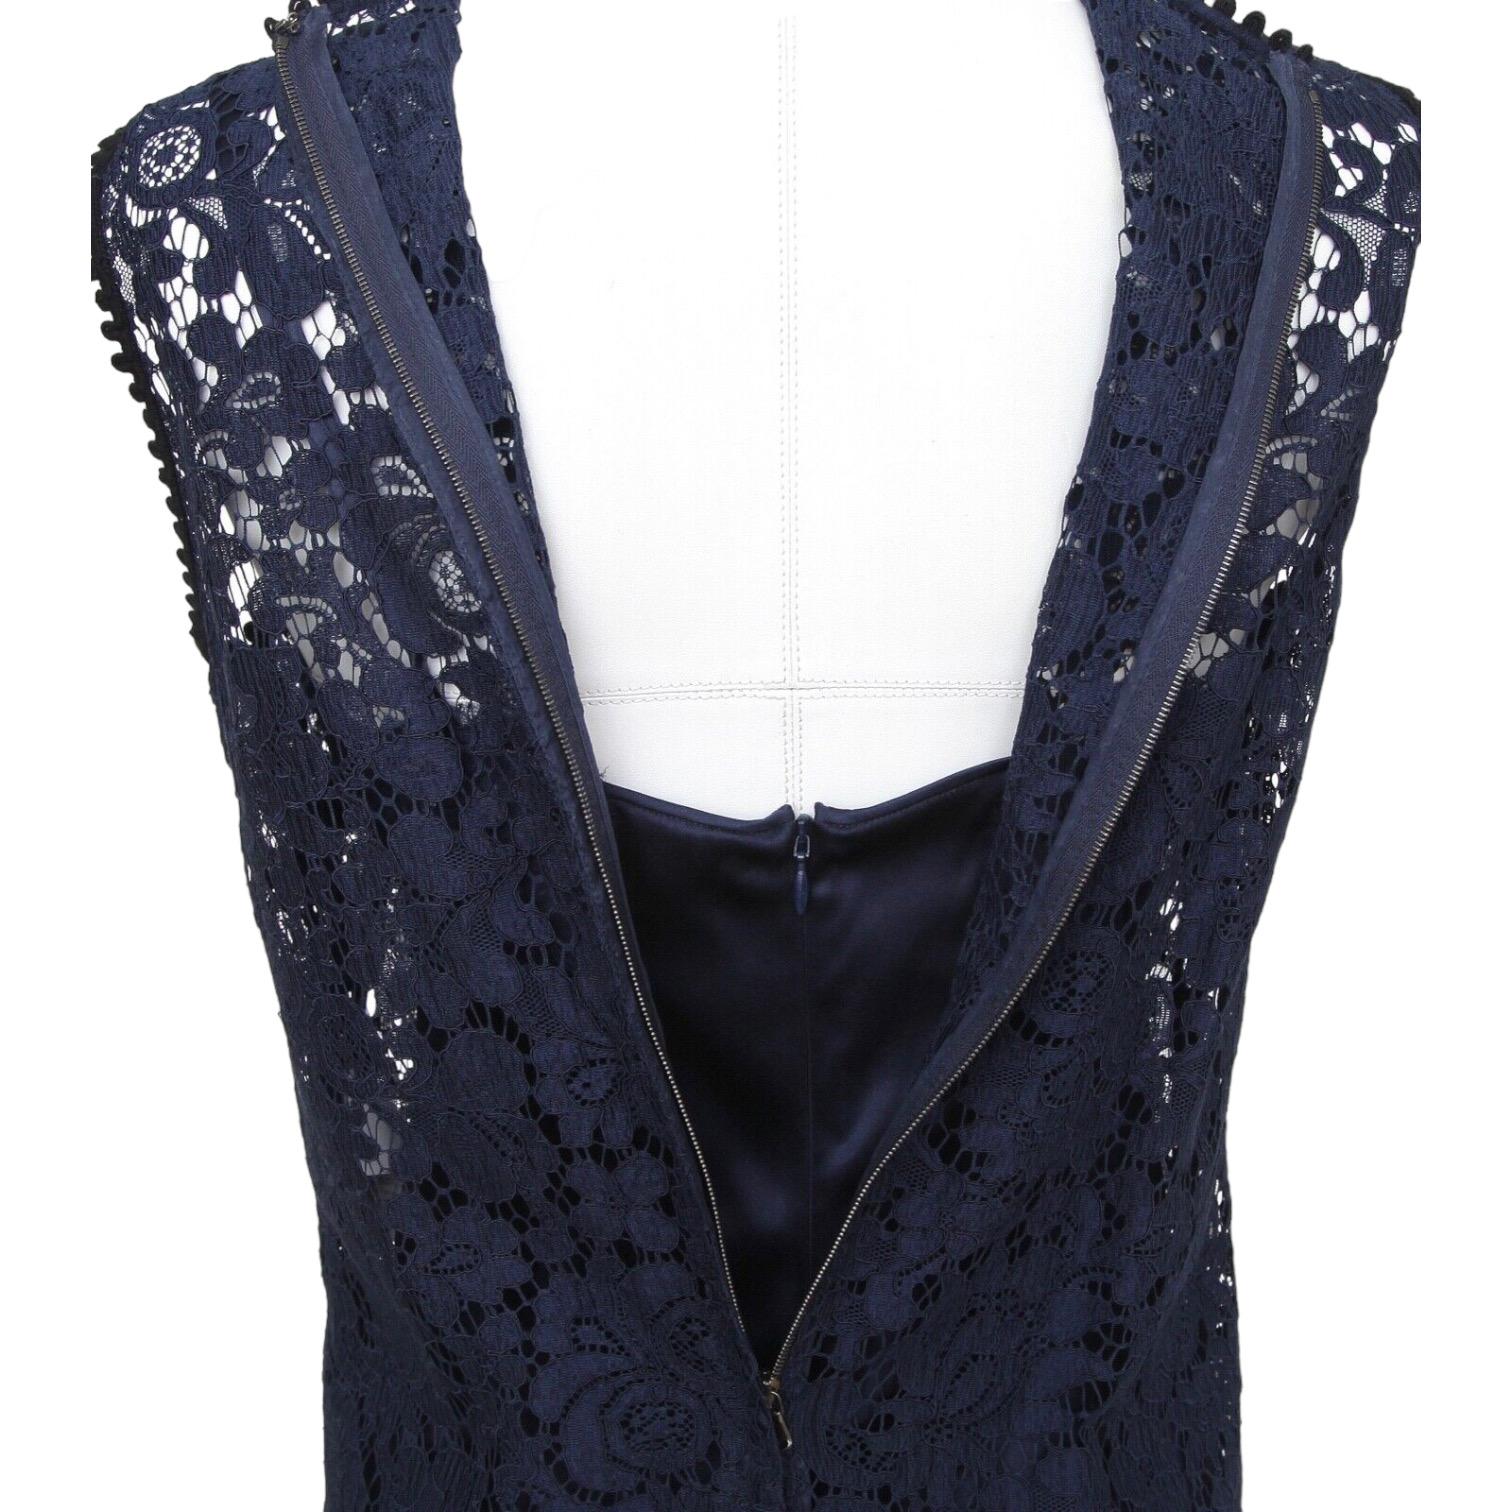 DOLCE & GABBANA Blouse Shirt Top Navy Blue Black Sleeveless Lace Sz 40 Ret $1495 For Sale 5